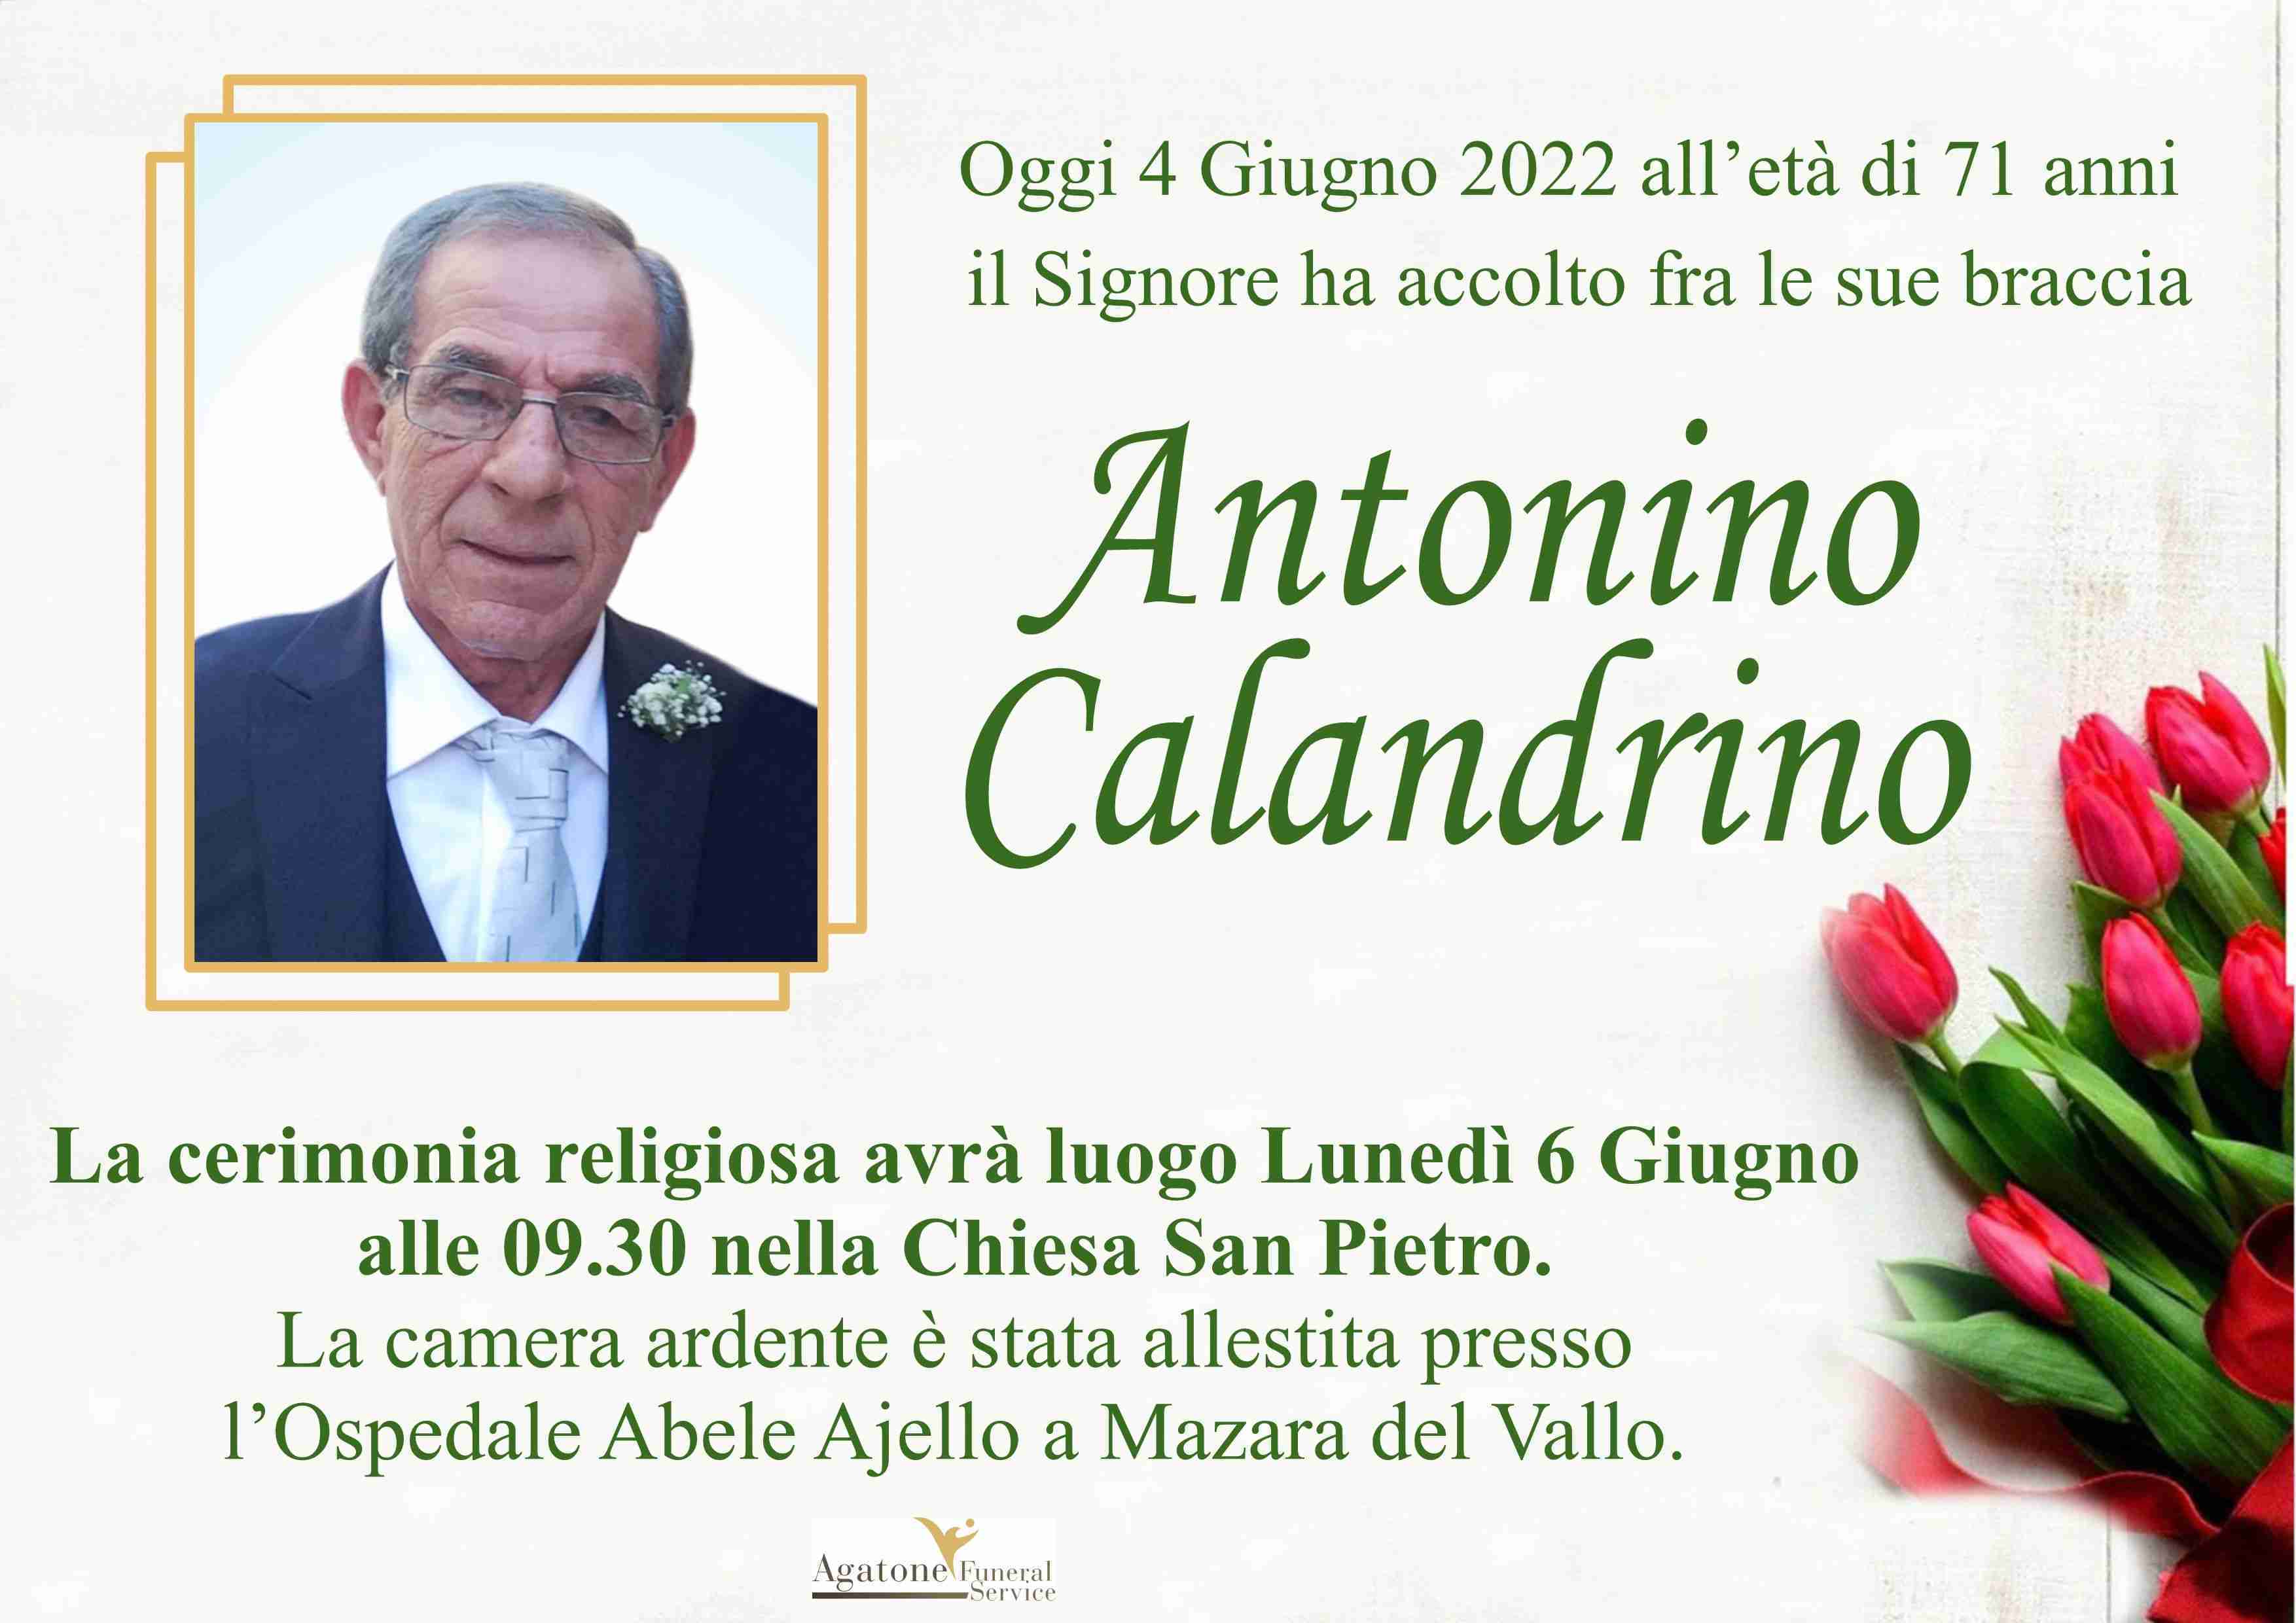 Antonino Calandrino